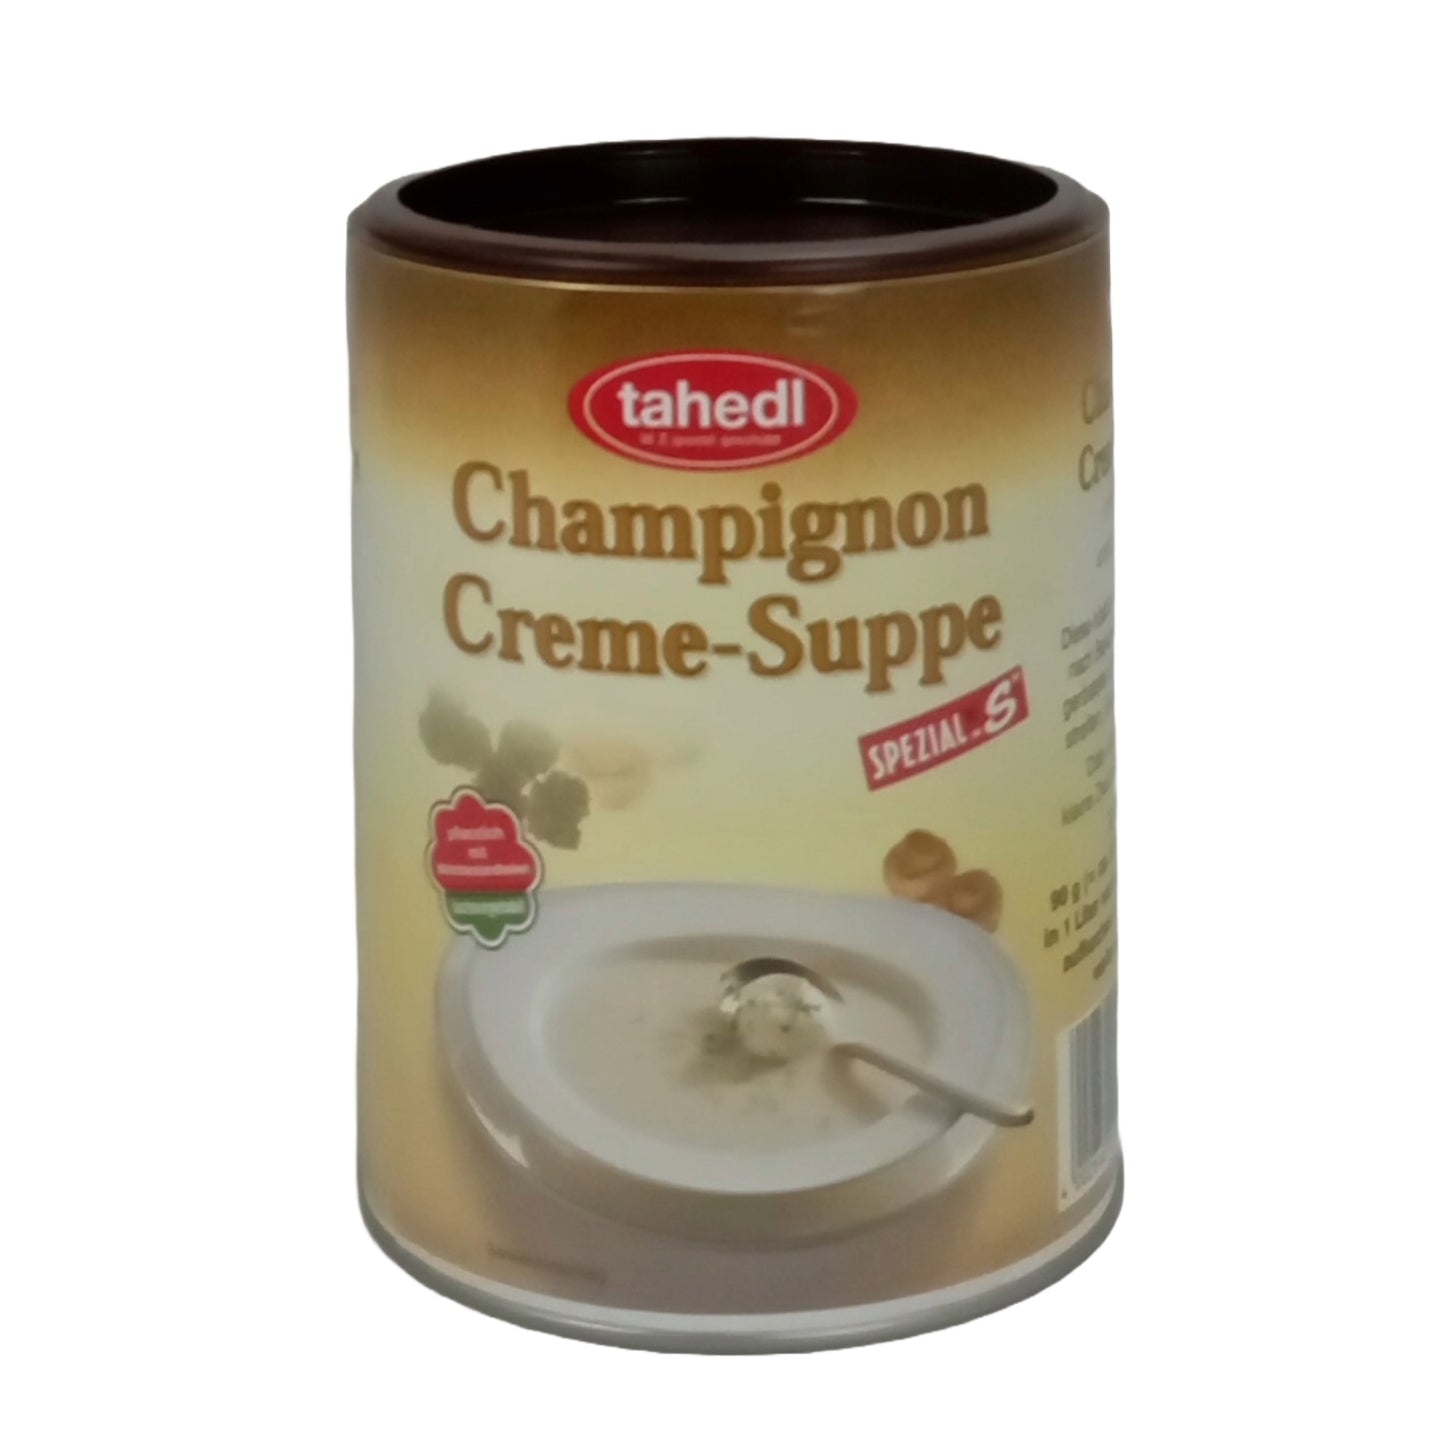 Champignon Creme-Suppe 450g (Tahedl)